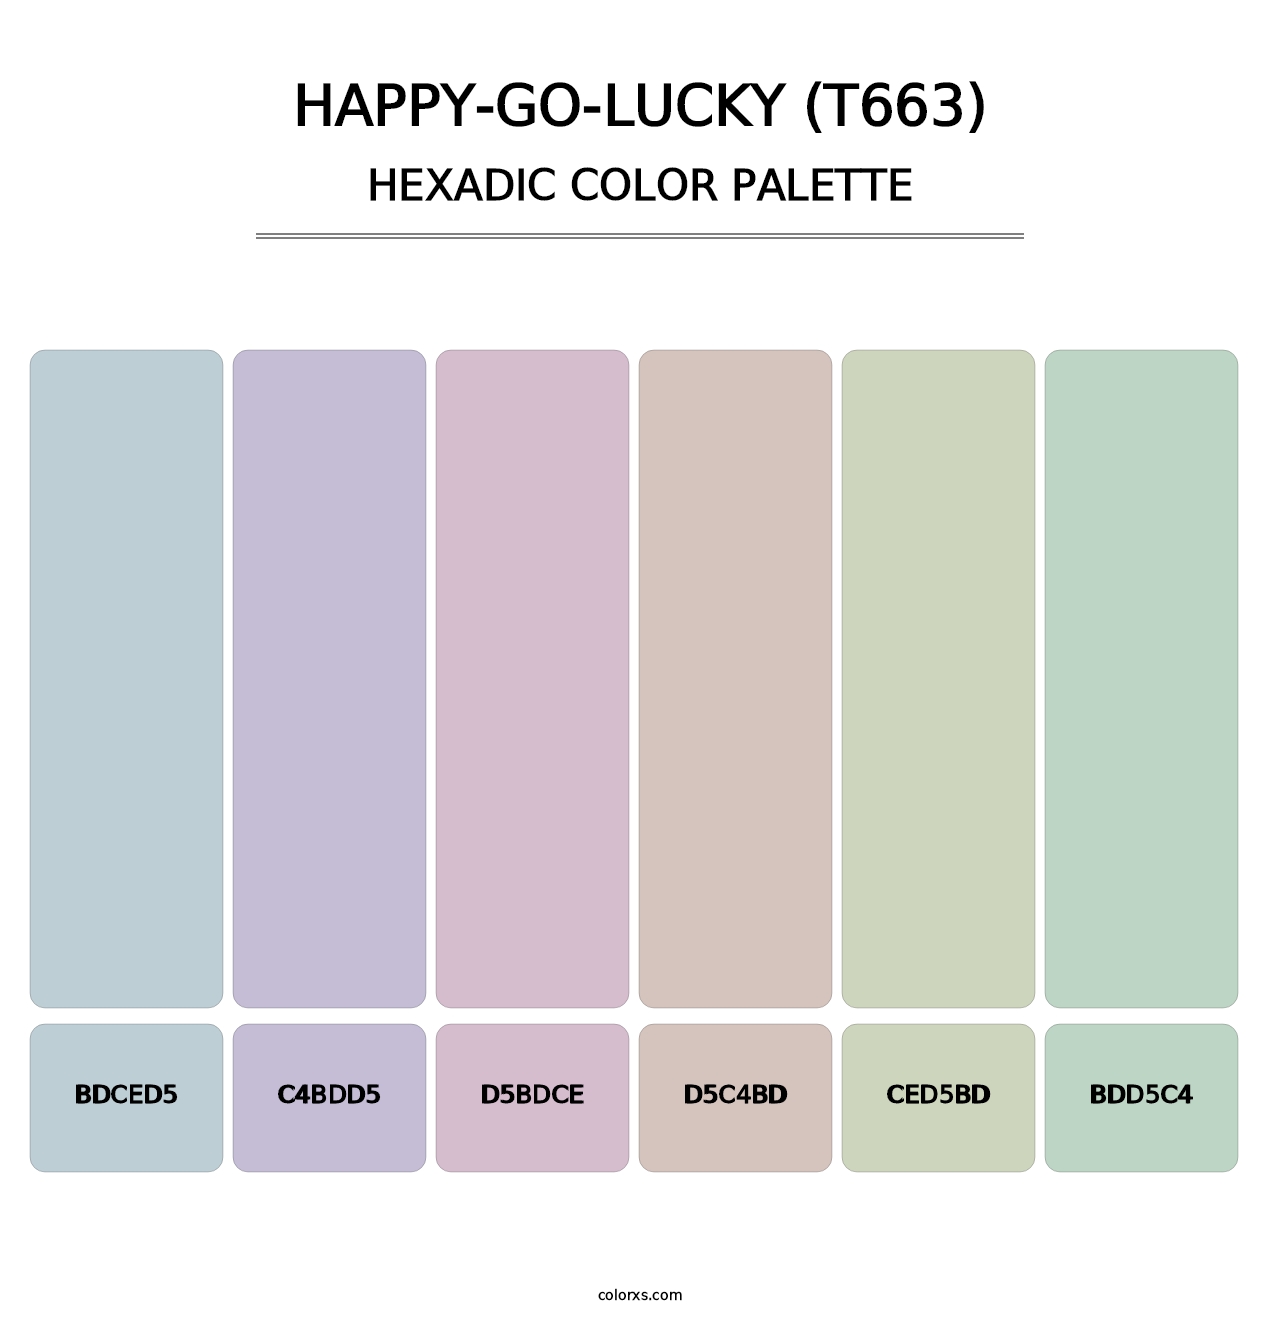 Happy-Go-Lucky (T663) - Hexadic Color Palette